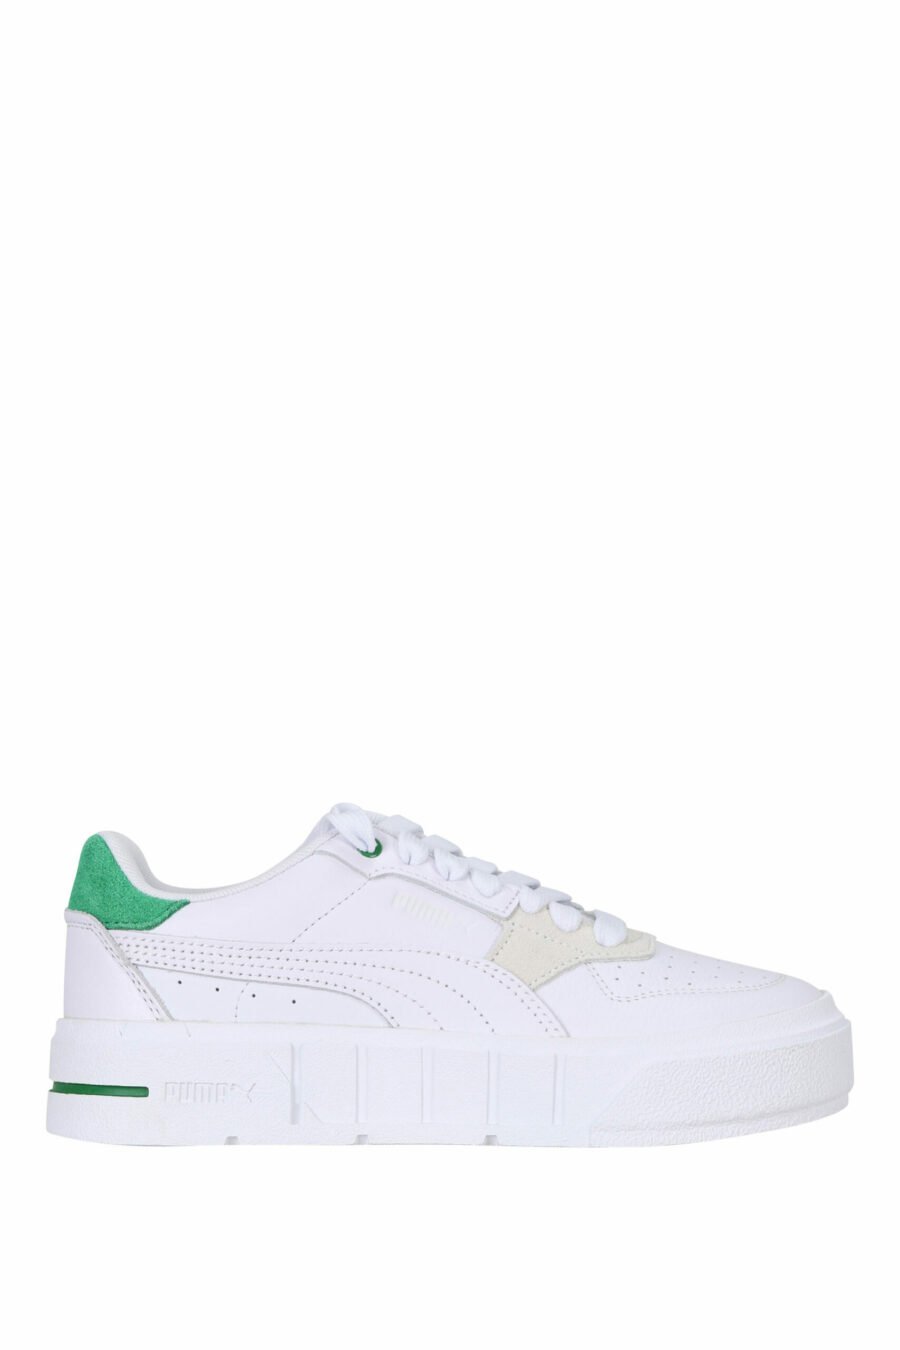 Zapatillas blancas con verde "cali court" - 4065454941770 scaled